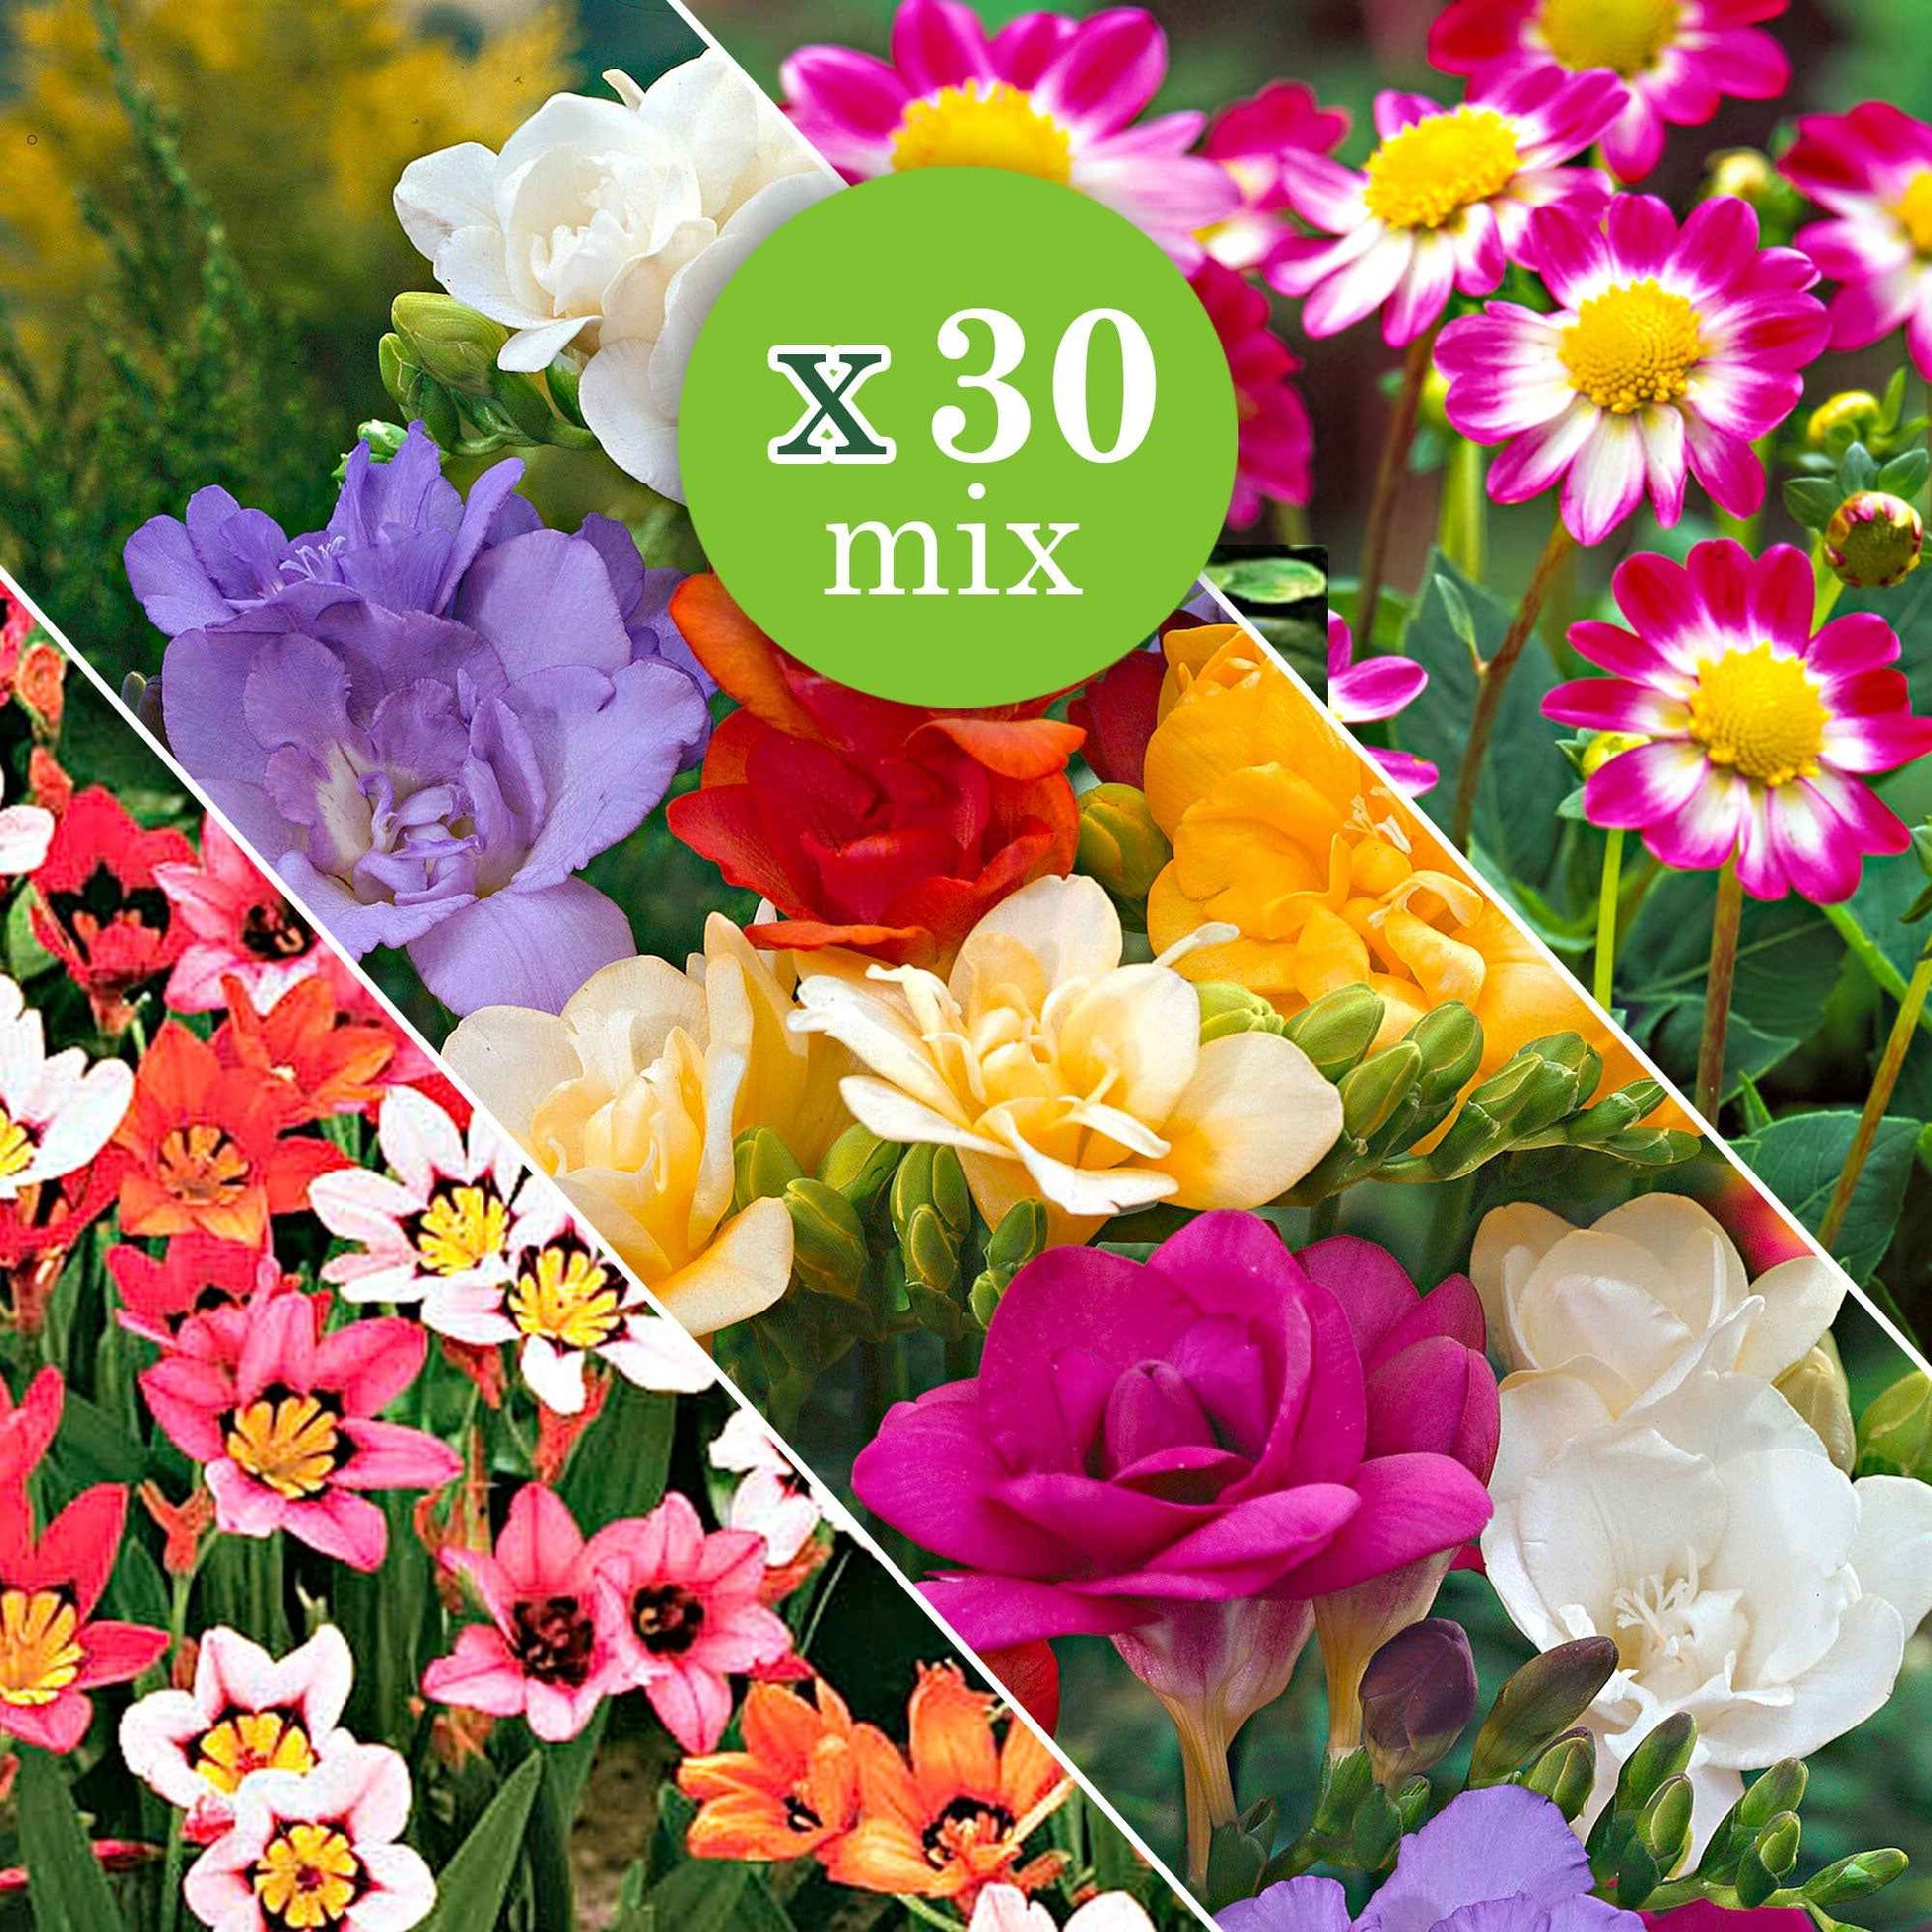 Bloembollen - Mix Freesia + Sparaxis + Dahlia (x30) - Freesia, sparaxis, dahlia - Bloembollenpakketten